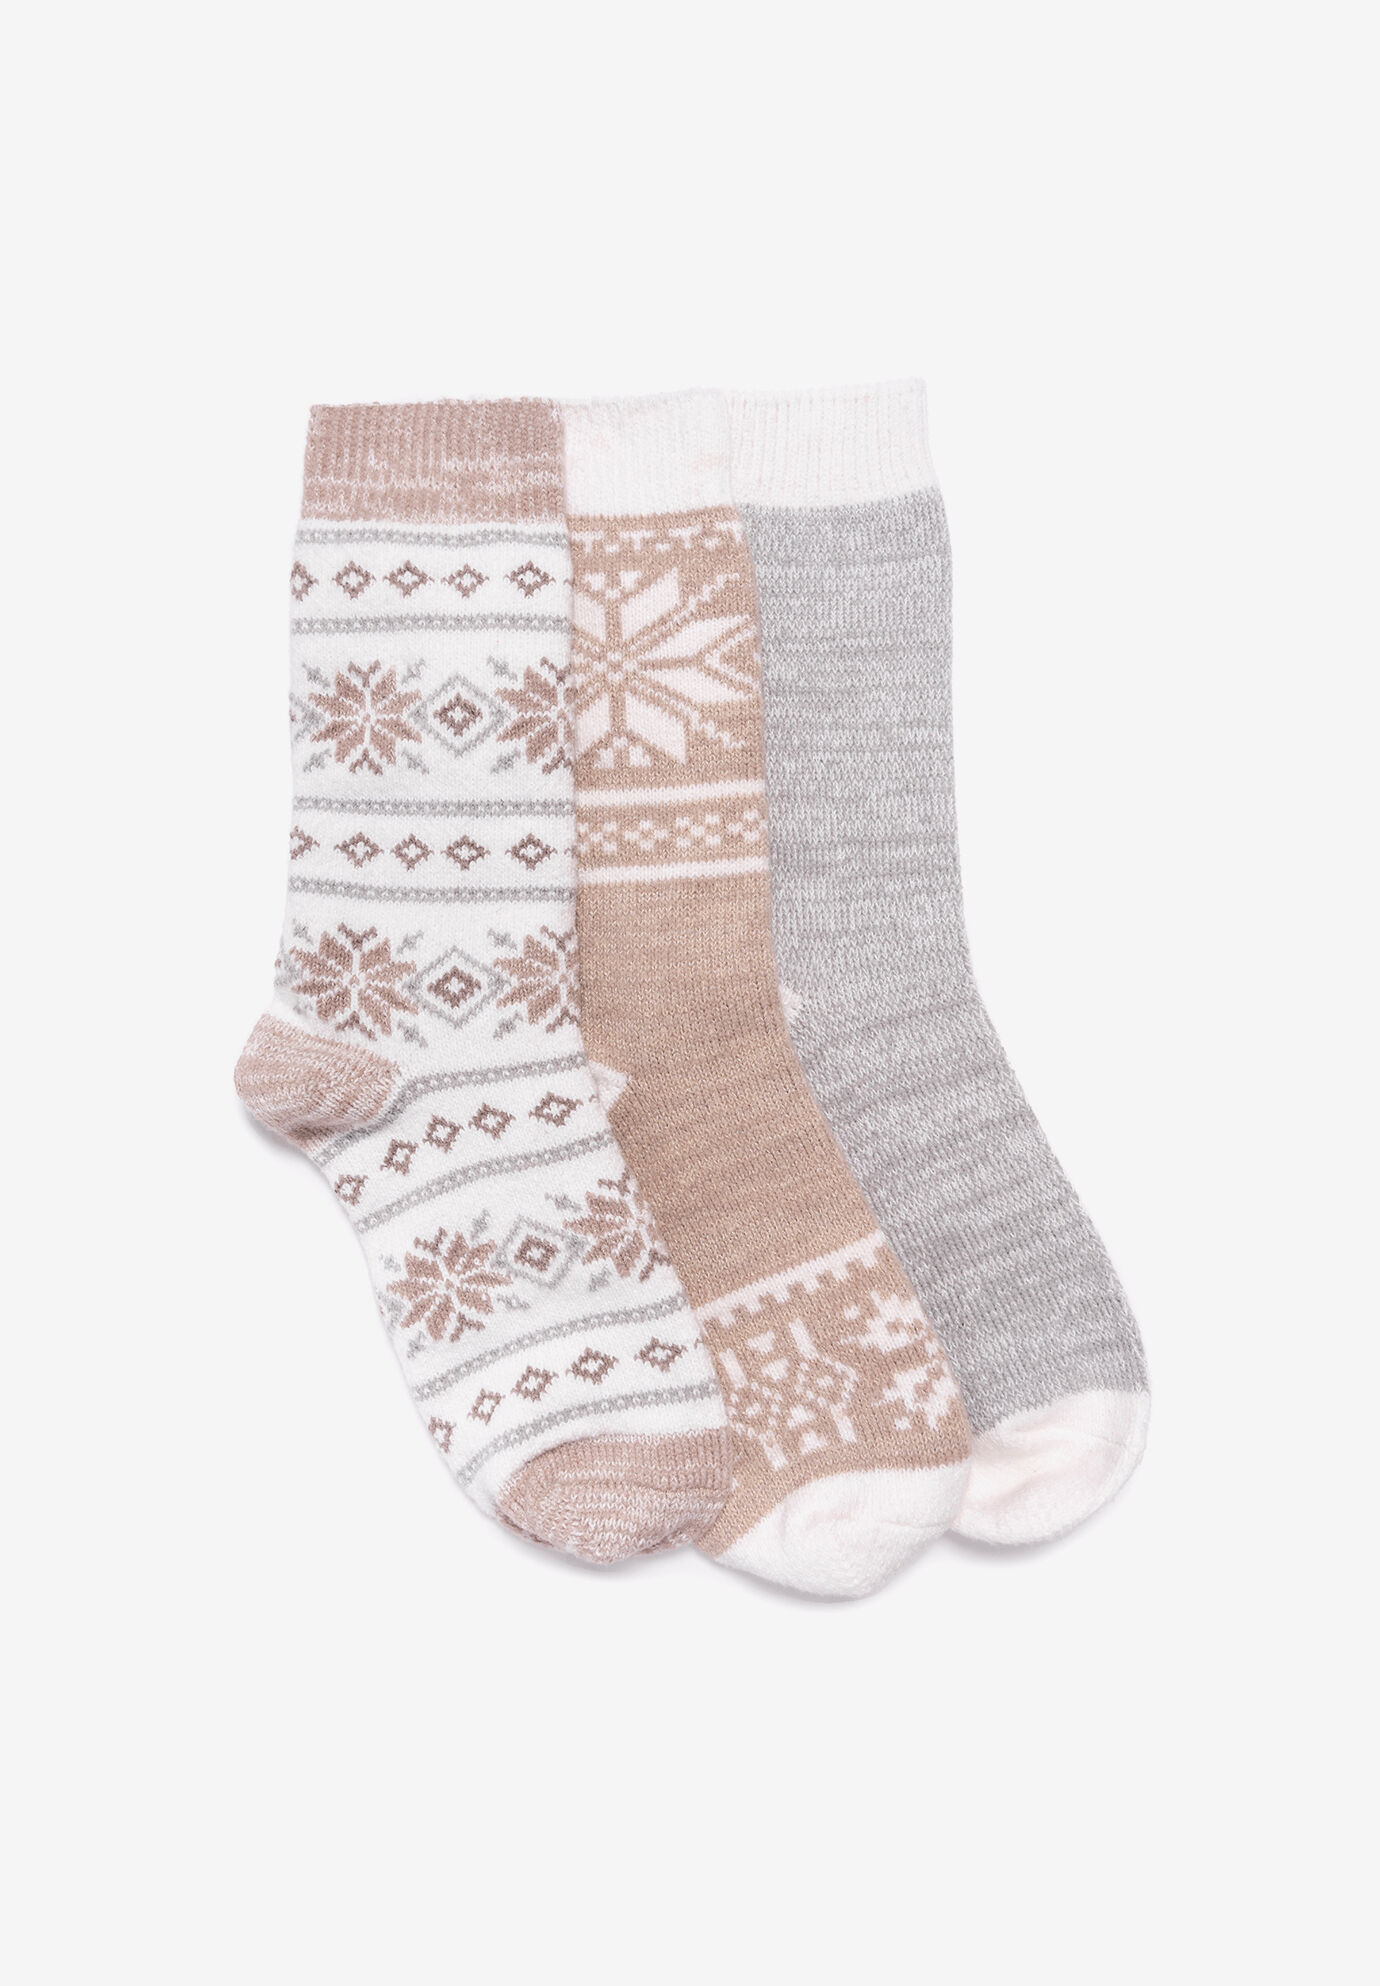 Women's 3 Pair Pack Boot Socks by MUK LUKS in Winter Shimmer (Size ONE)